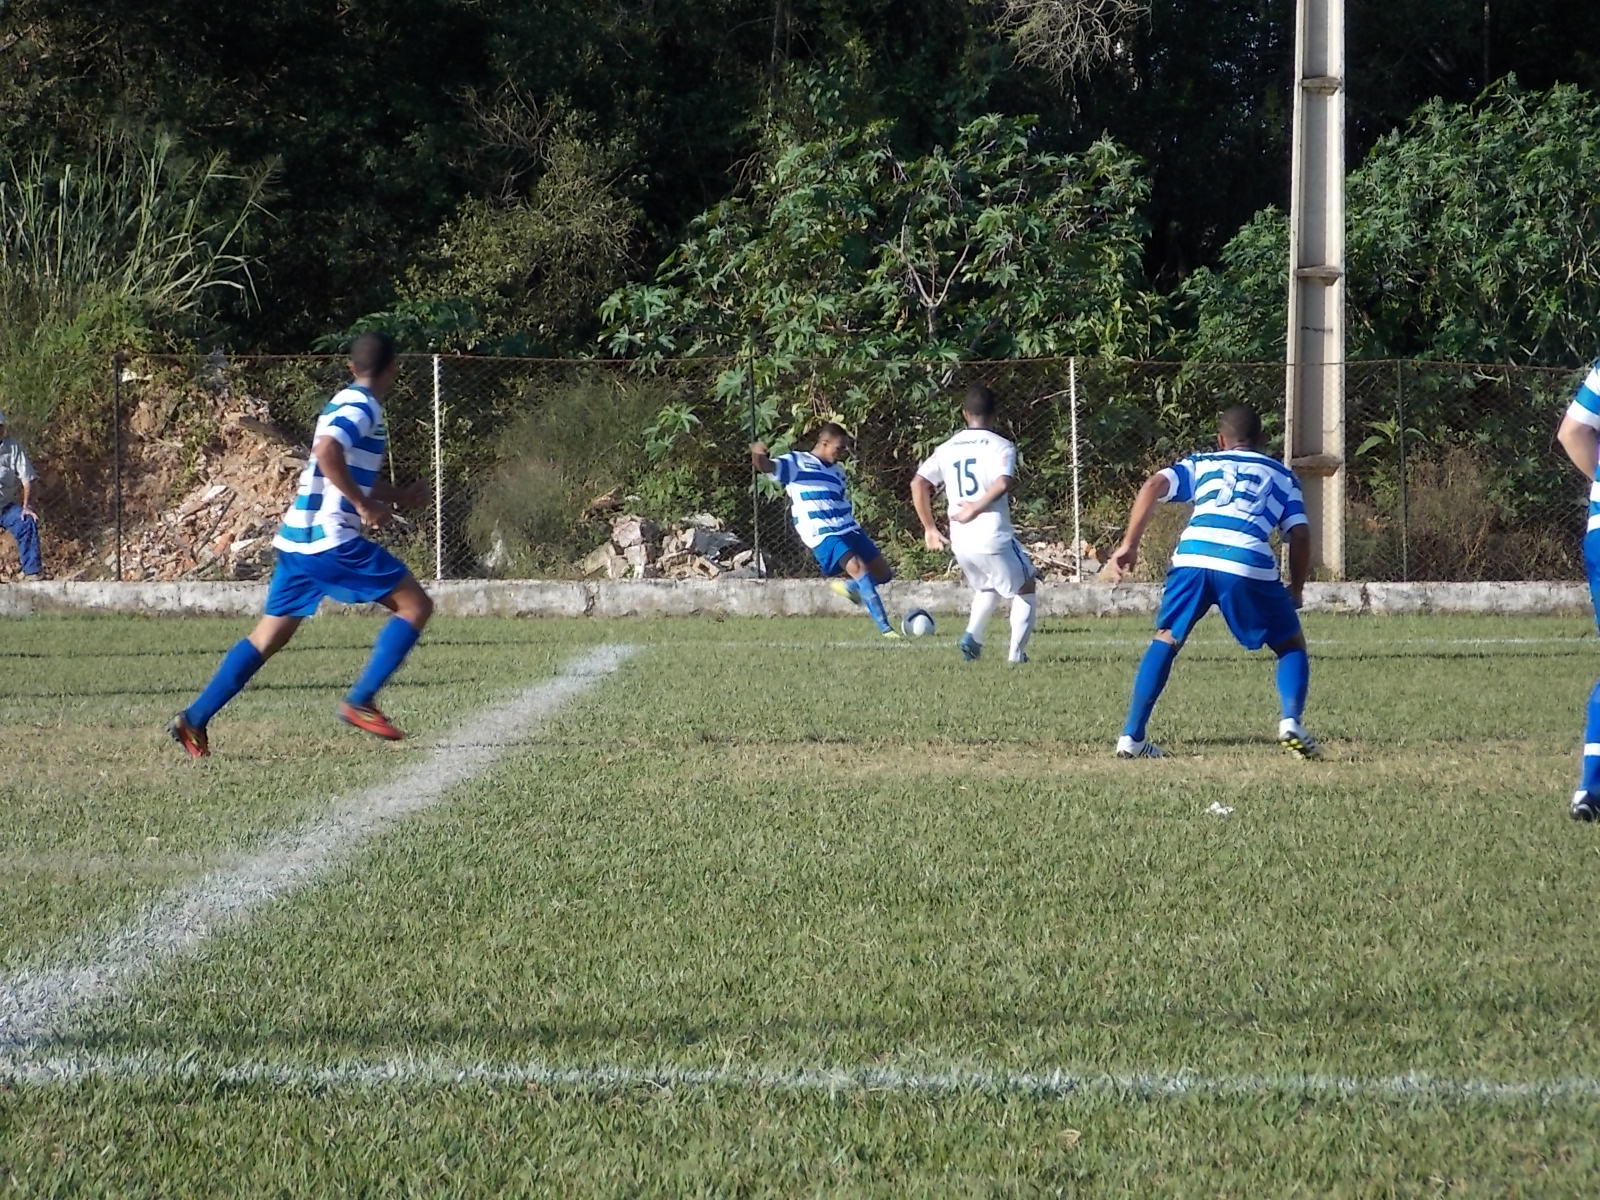 Equipe do Minas (de azul) teve dificuldades durante a partida. FOTO/VAN: Anna Virginia